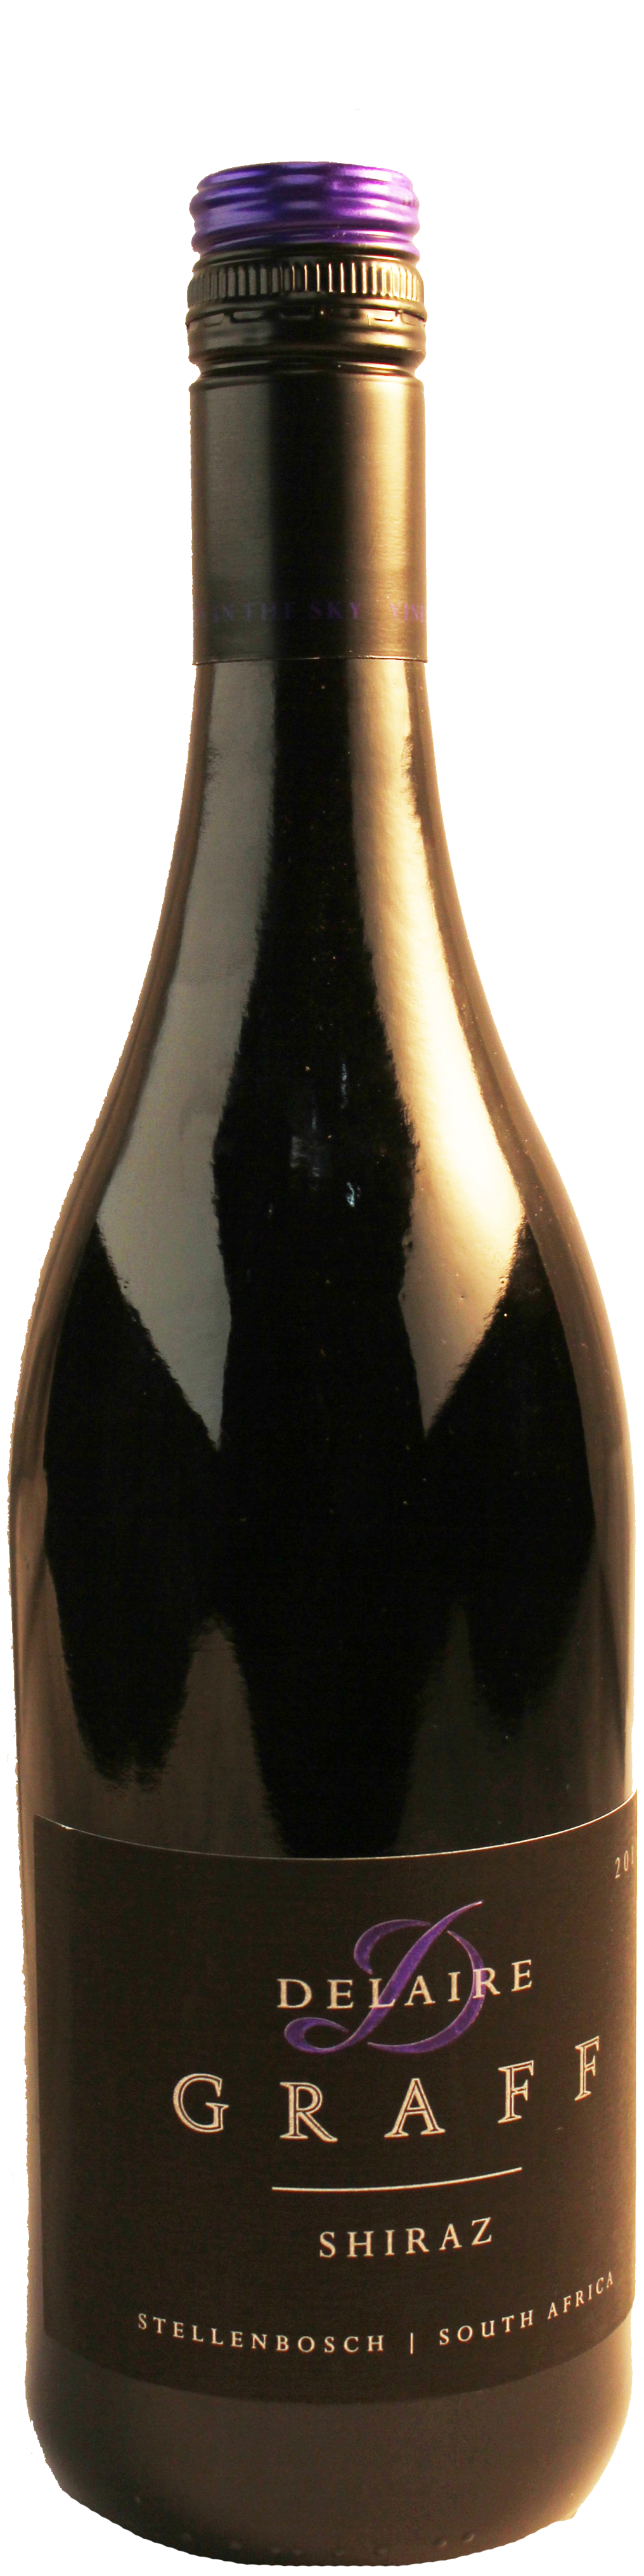 Bottle shot of 2013 Shiraz